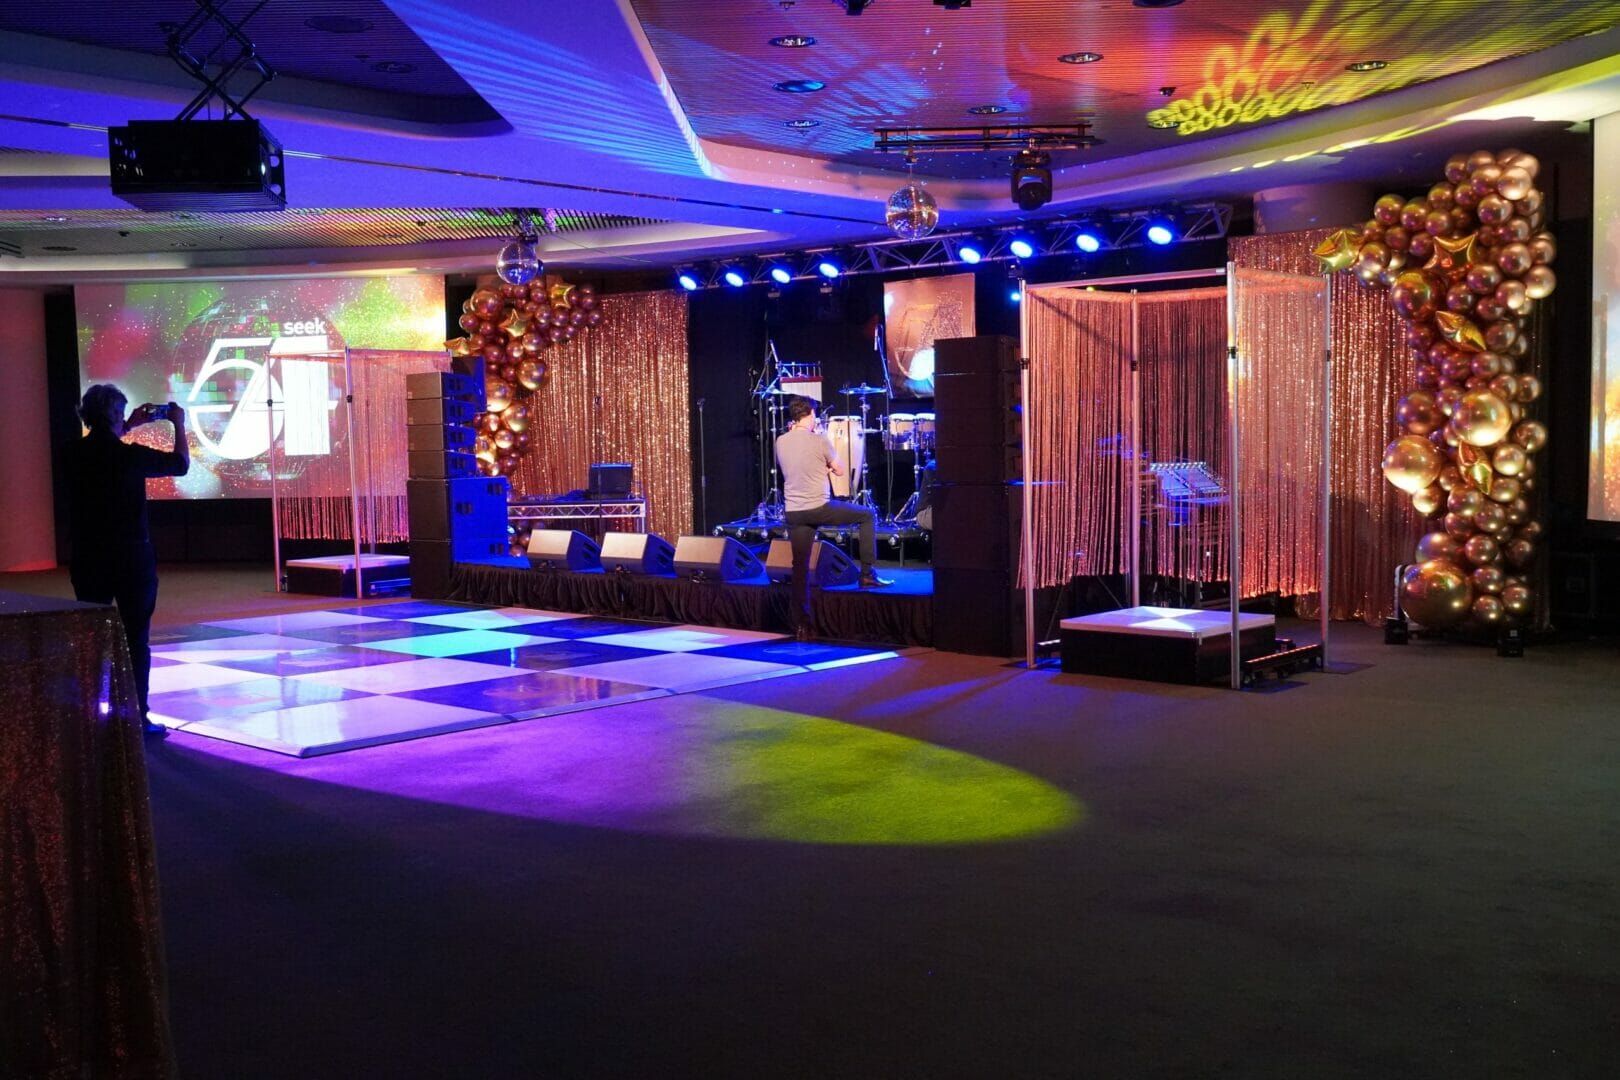 RACV Cape Schanck studio 54 themed transformation stage, dance floor and lighting